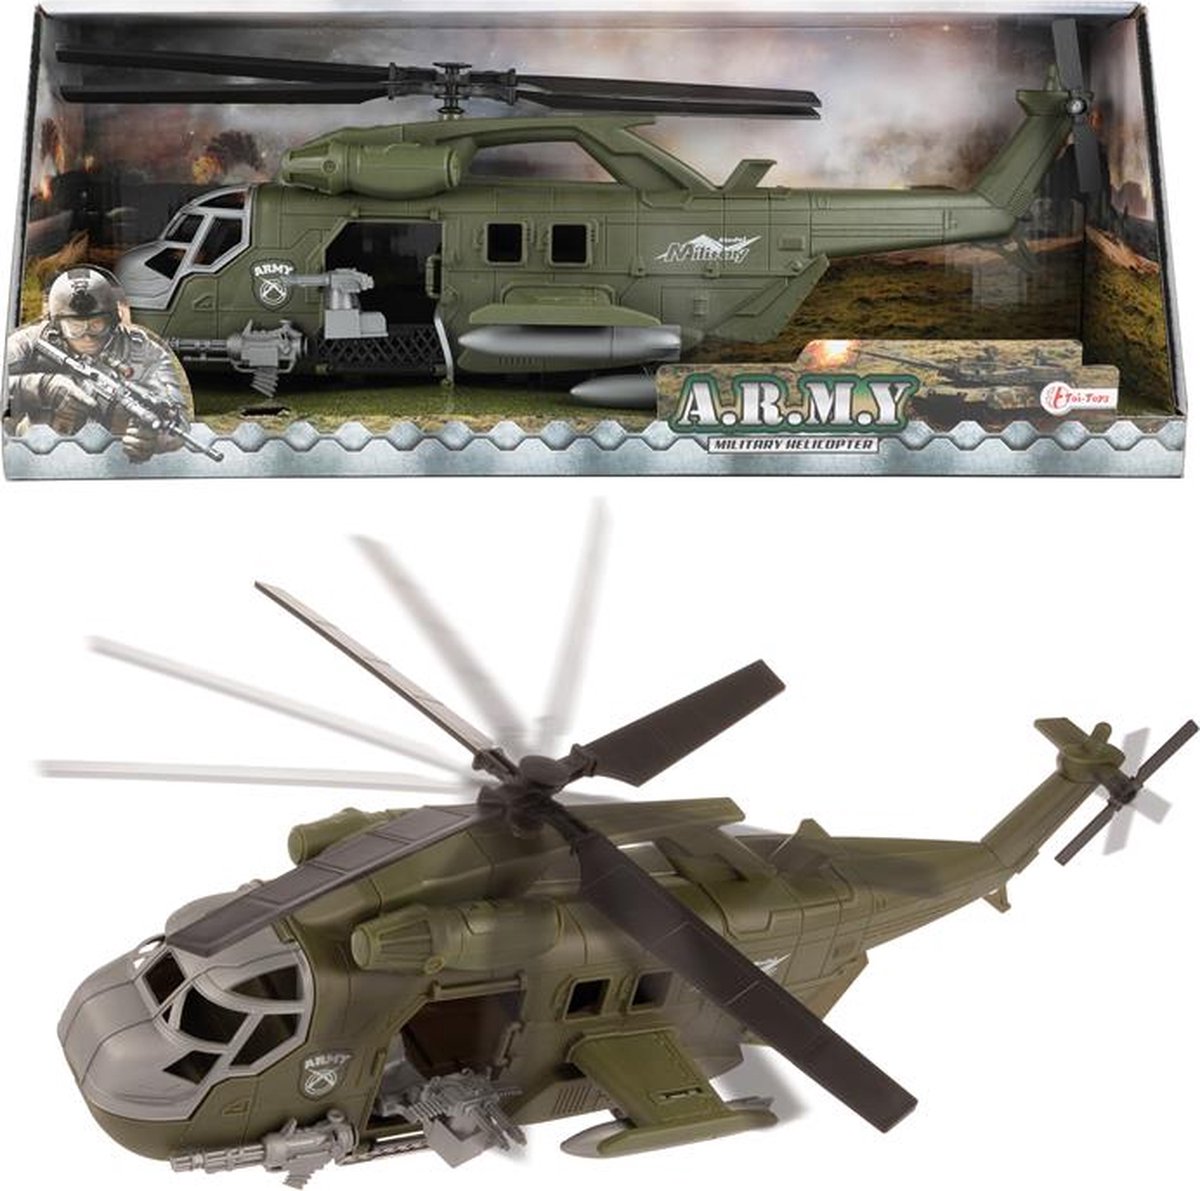 Toi-Toys Toi Toys gevechtshelikopter 20 cm - Groen